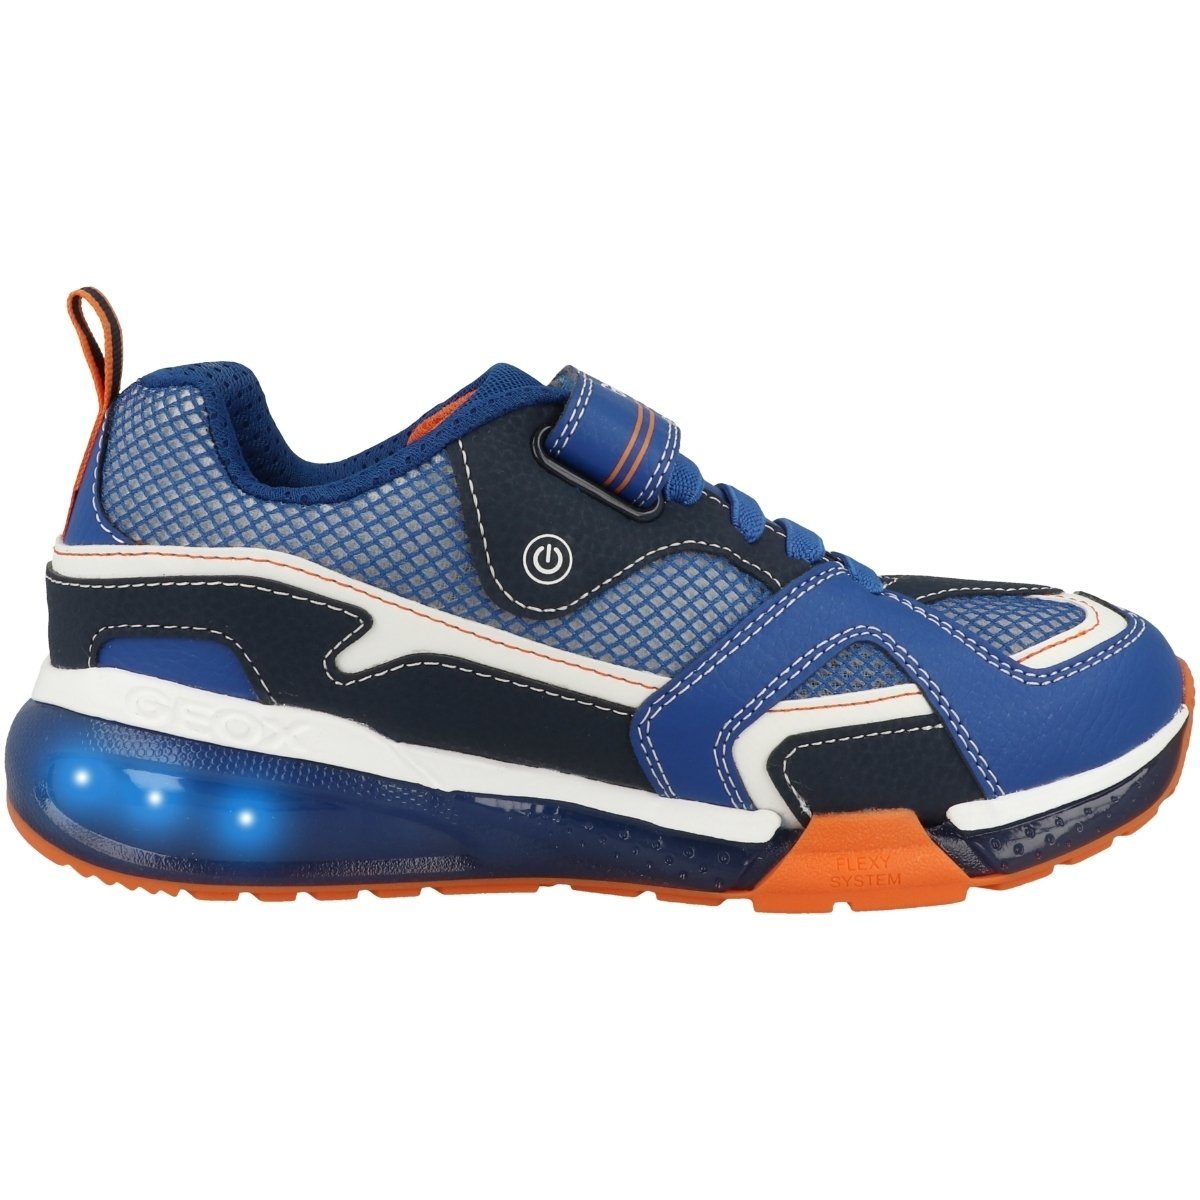 B. Sneaker Geox J LED Kinder Funktion Bayonyc dunkelblau A Unisex